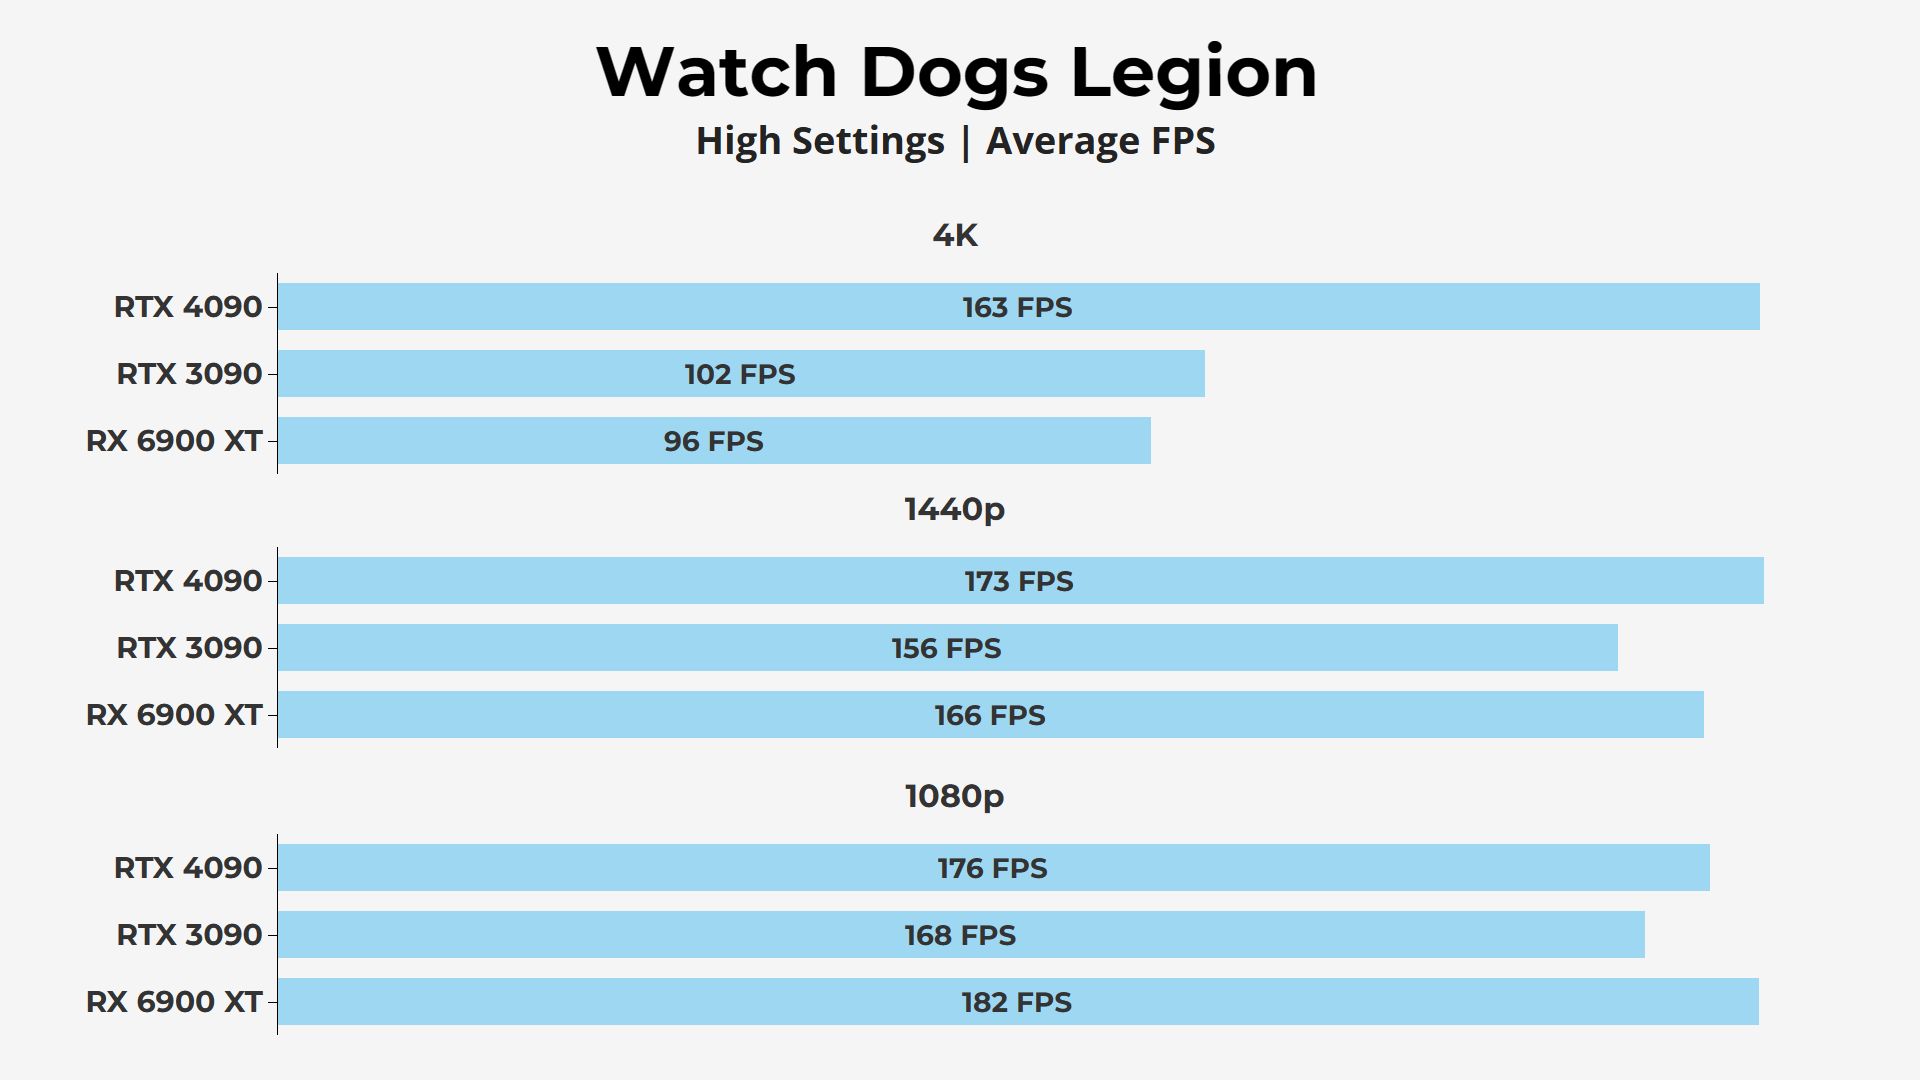 Watch dogs legion RTX 4090